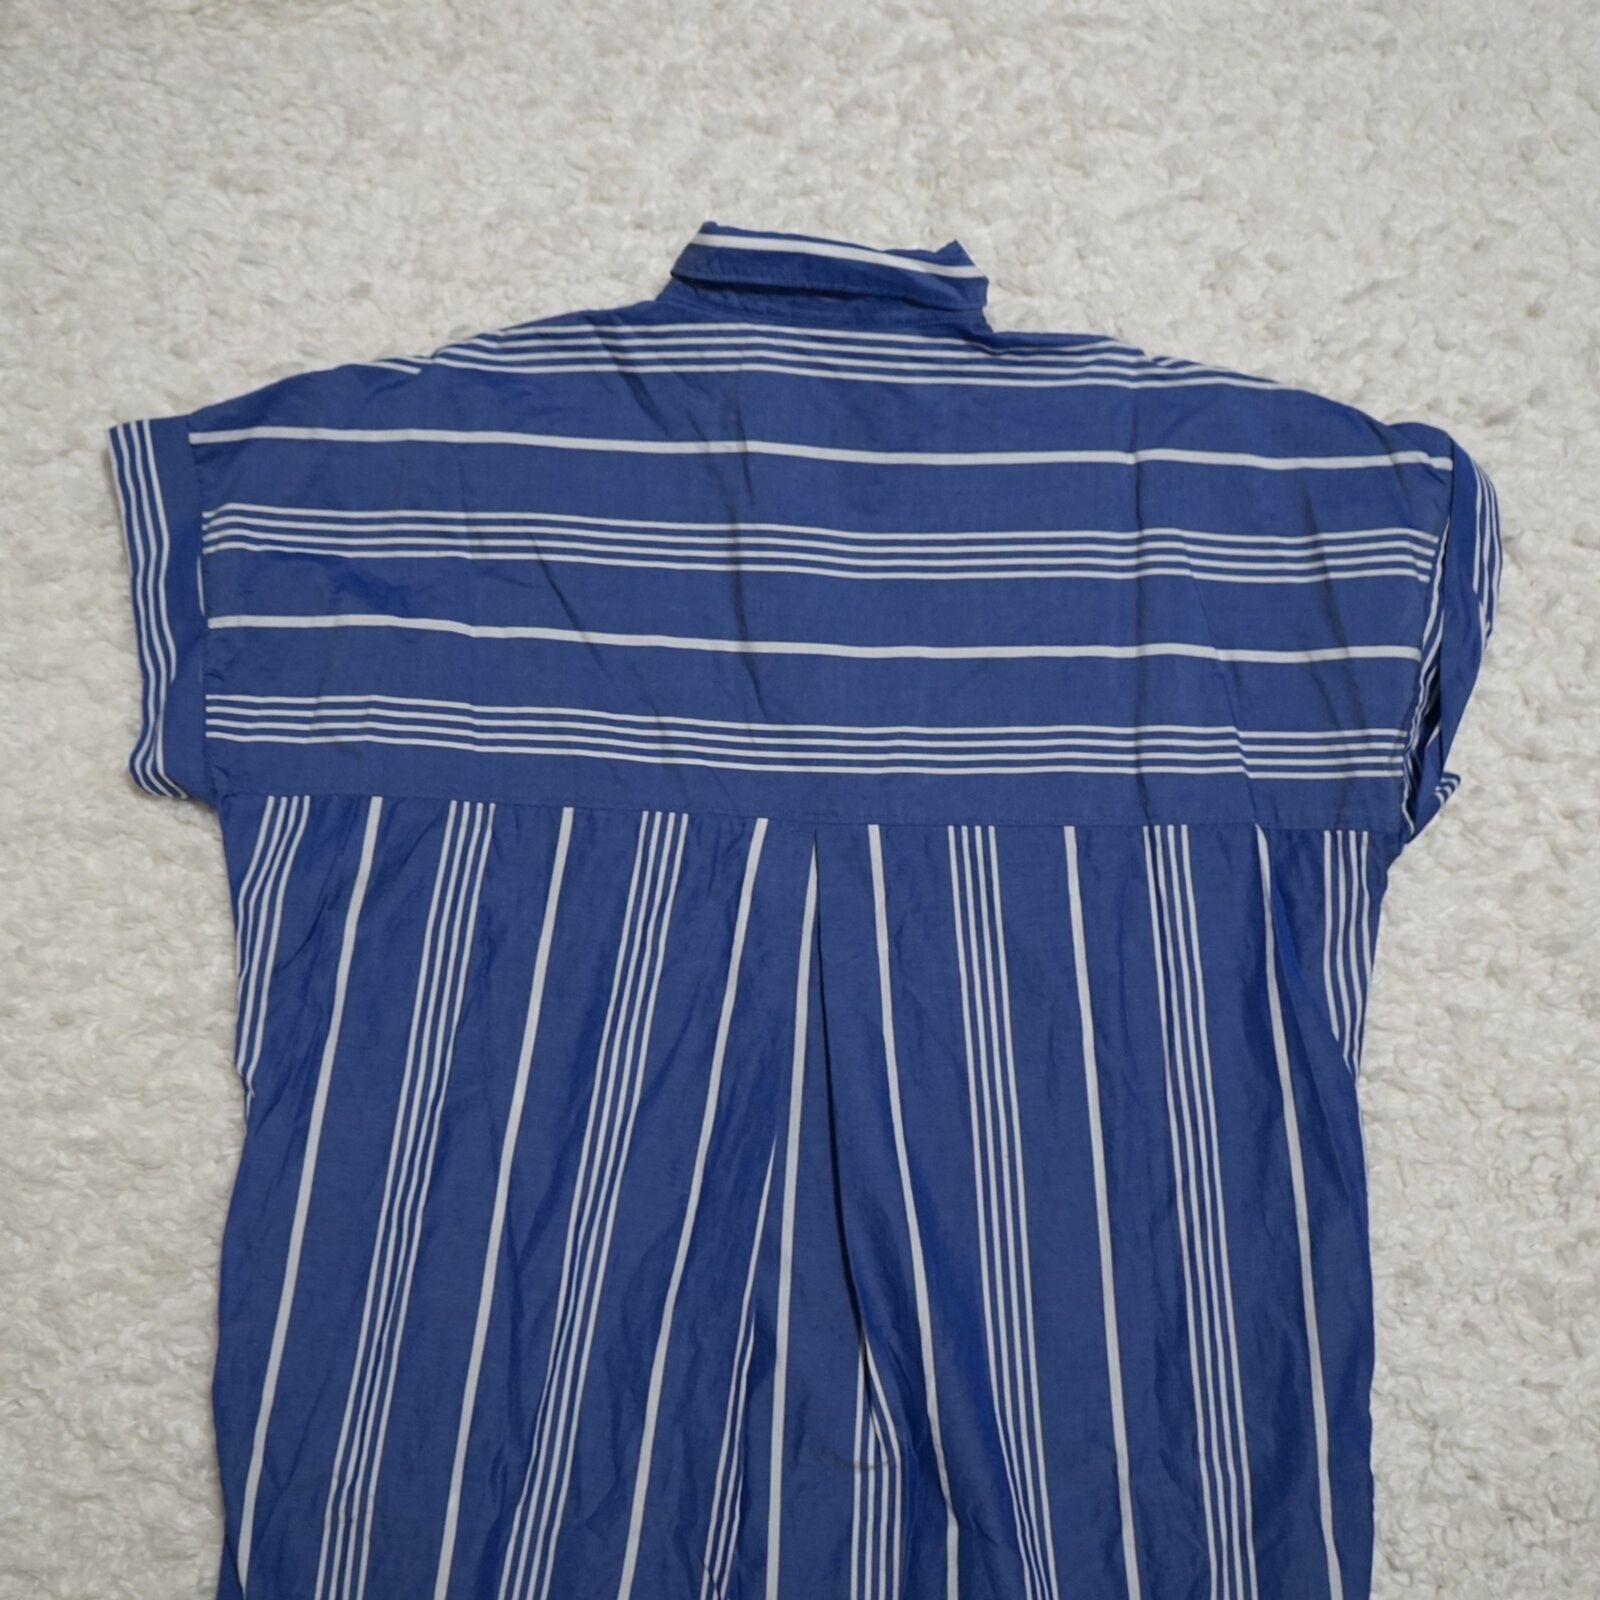 Madewell Lakeline Shirt Dress Blue and White Stri… - image 9